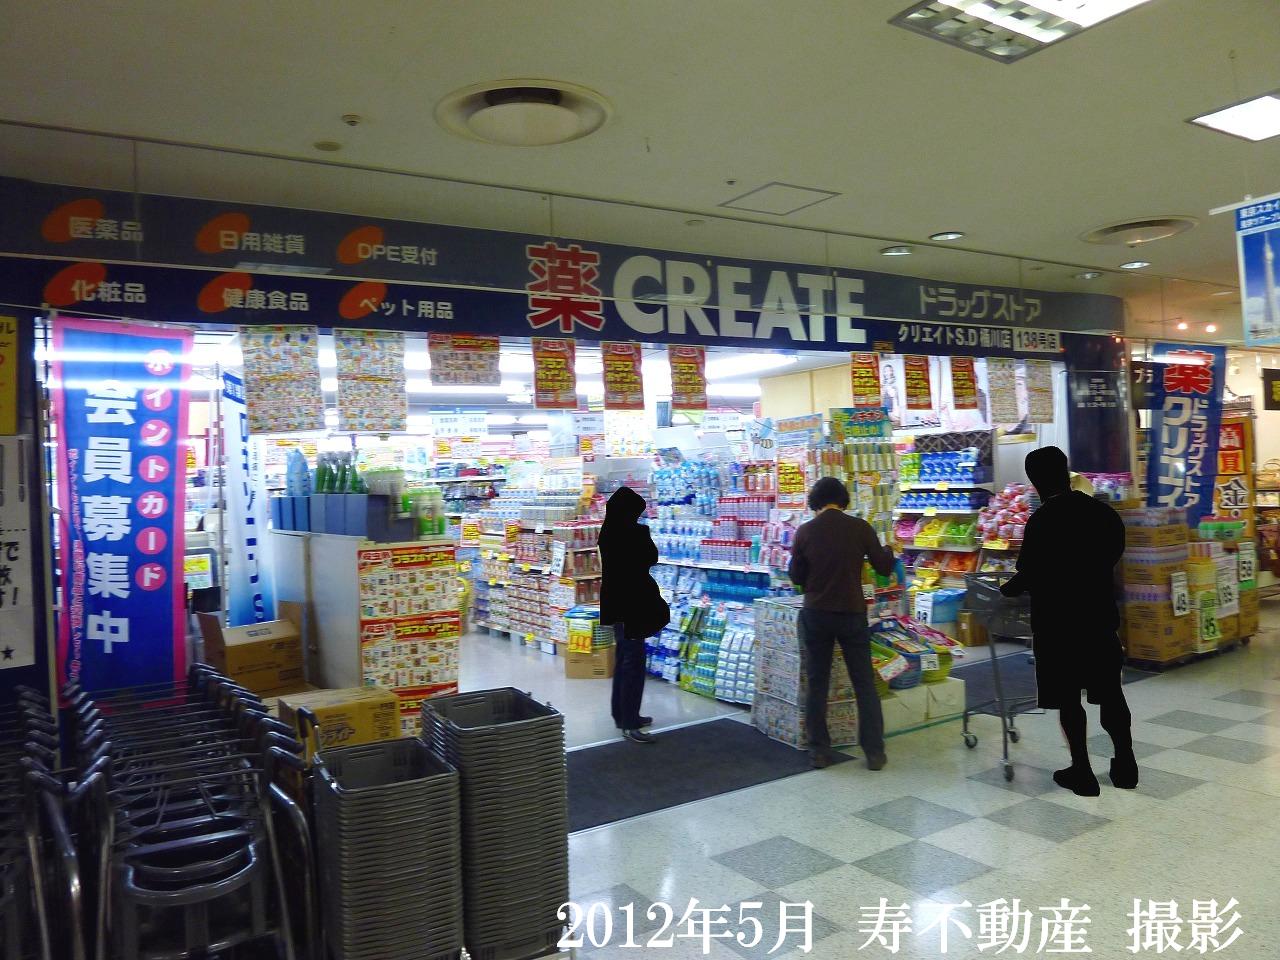 Dorakkusutoa. Create es ・ Dee Okegawa shop 533m until (drugstore)